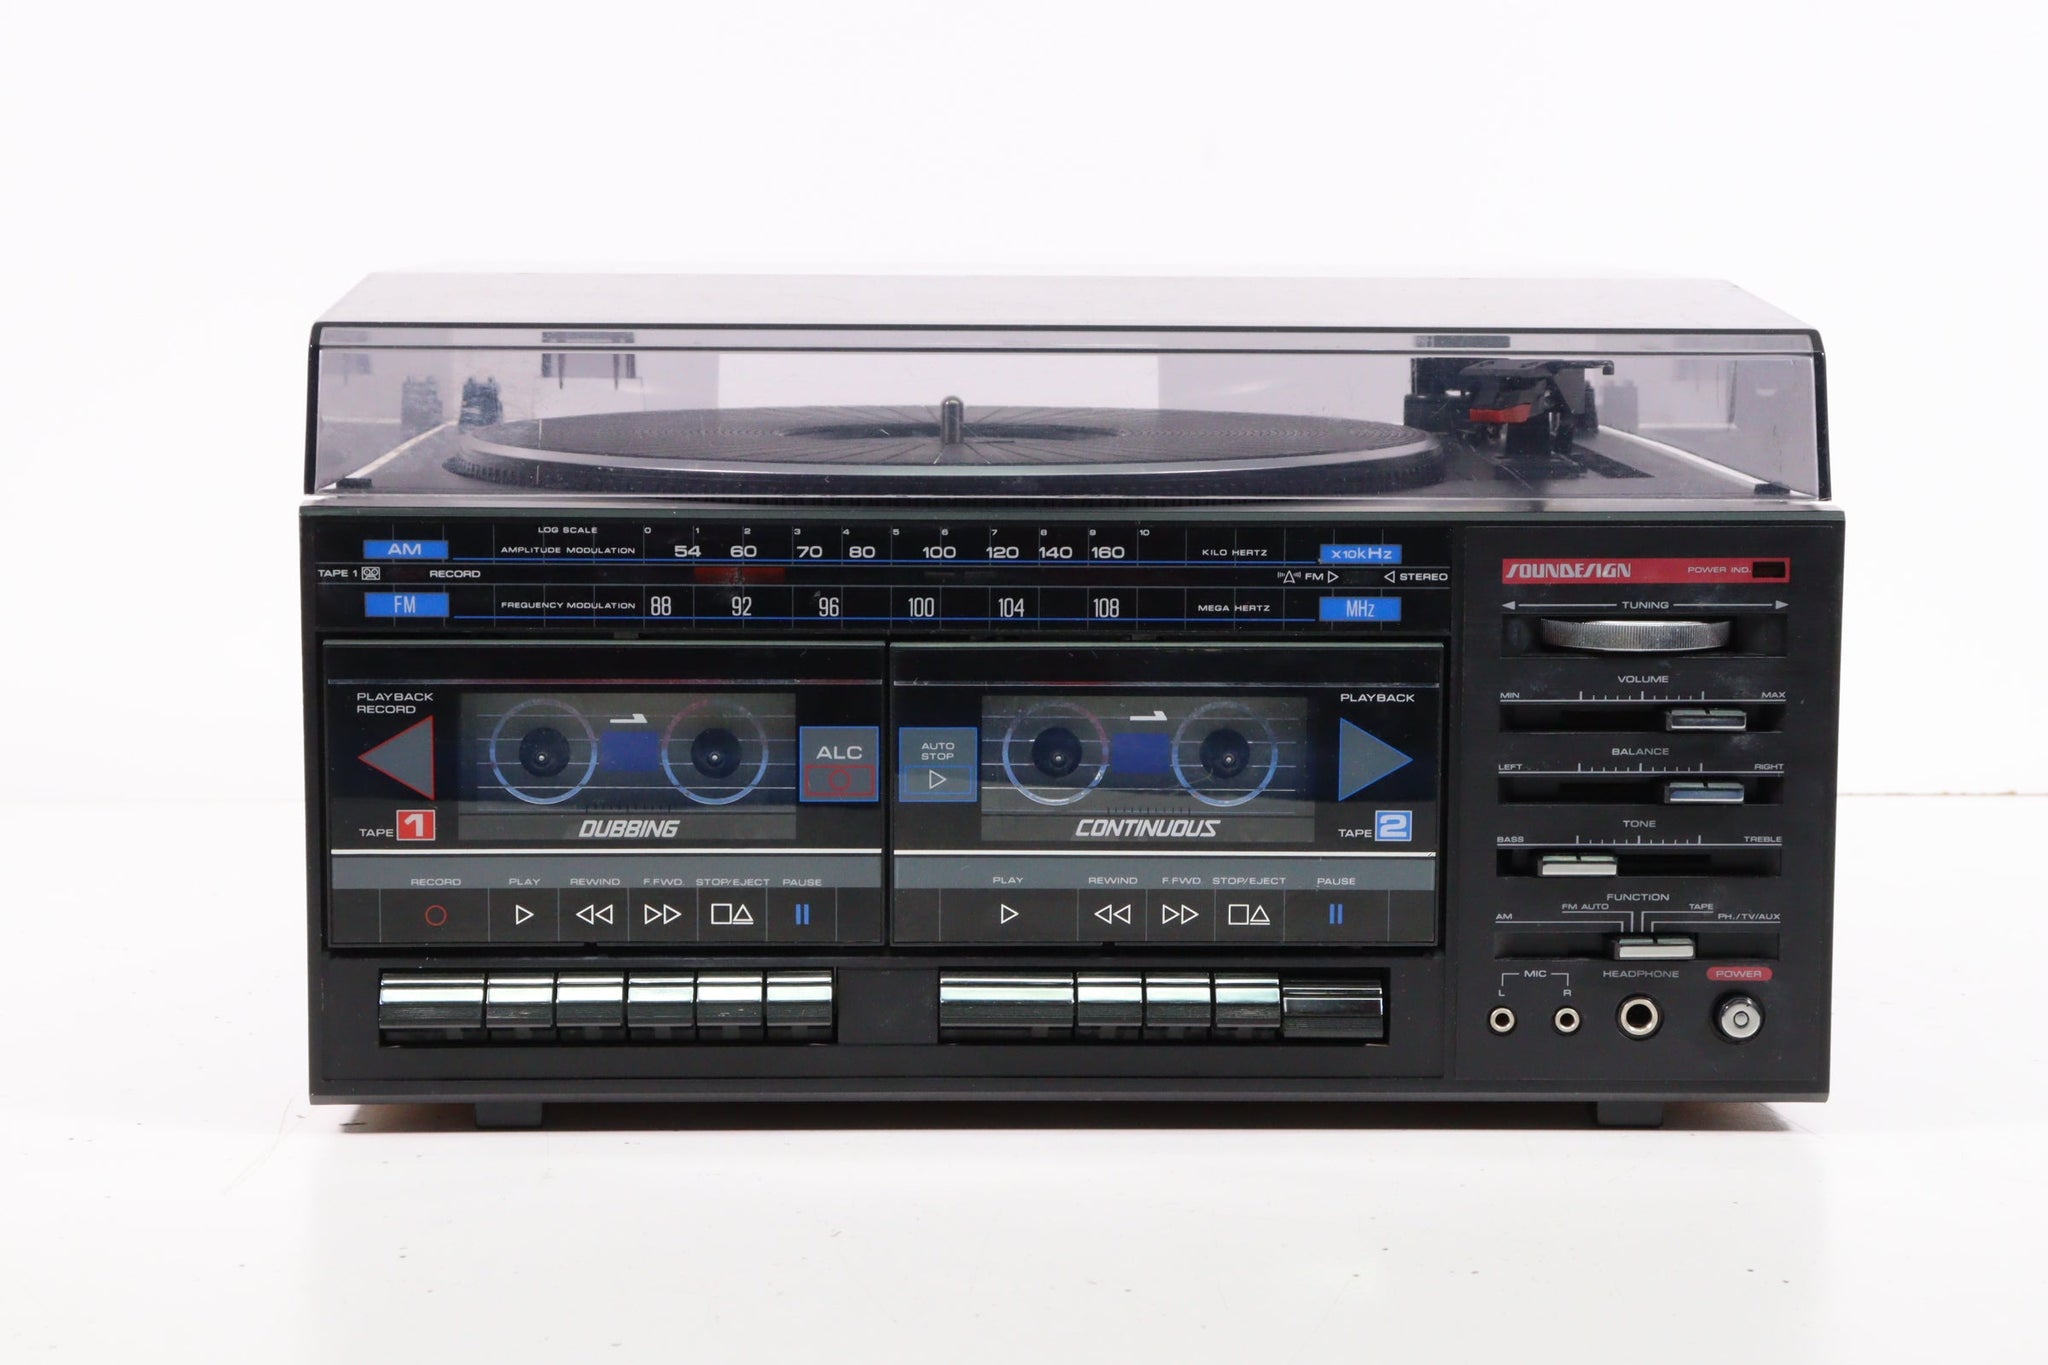 Cassette Player/Recorder